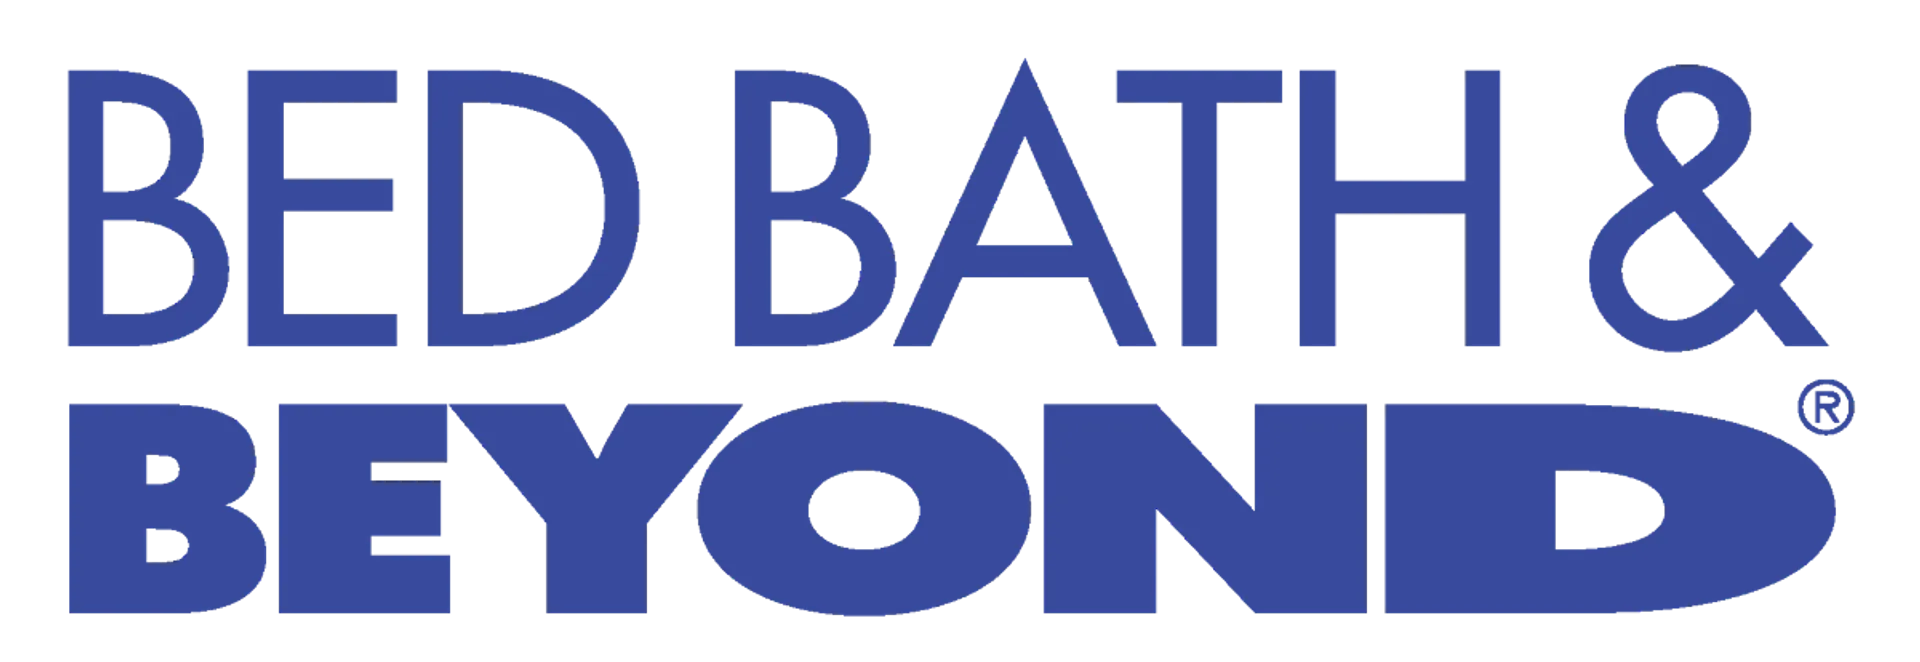 BED BATH & BEYOND logo